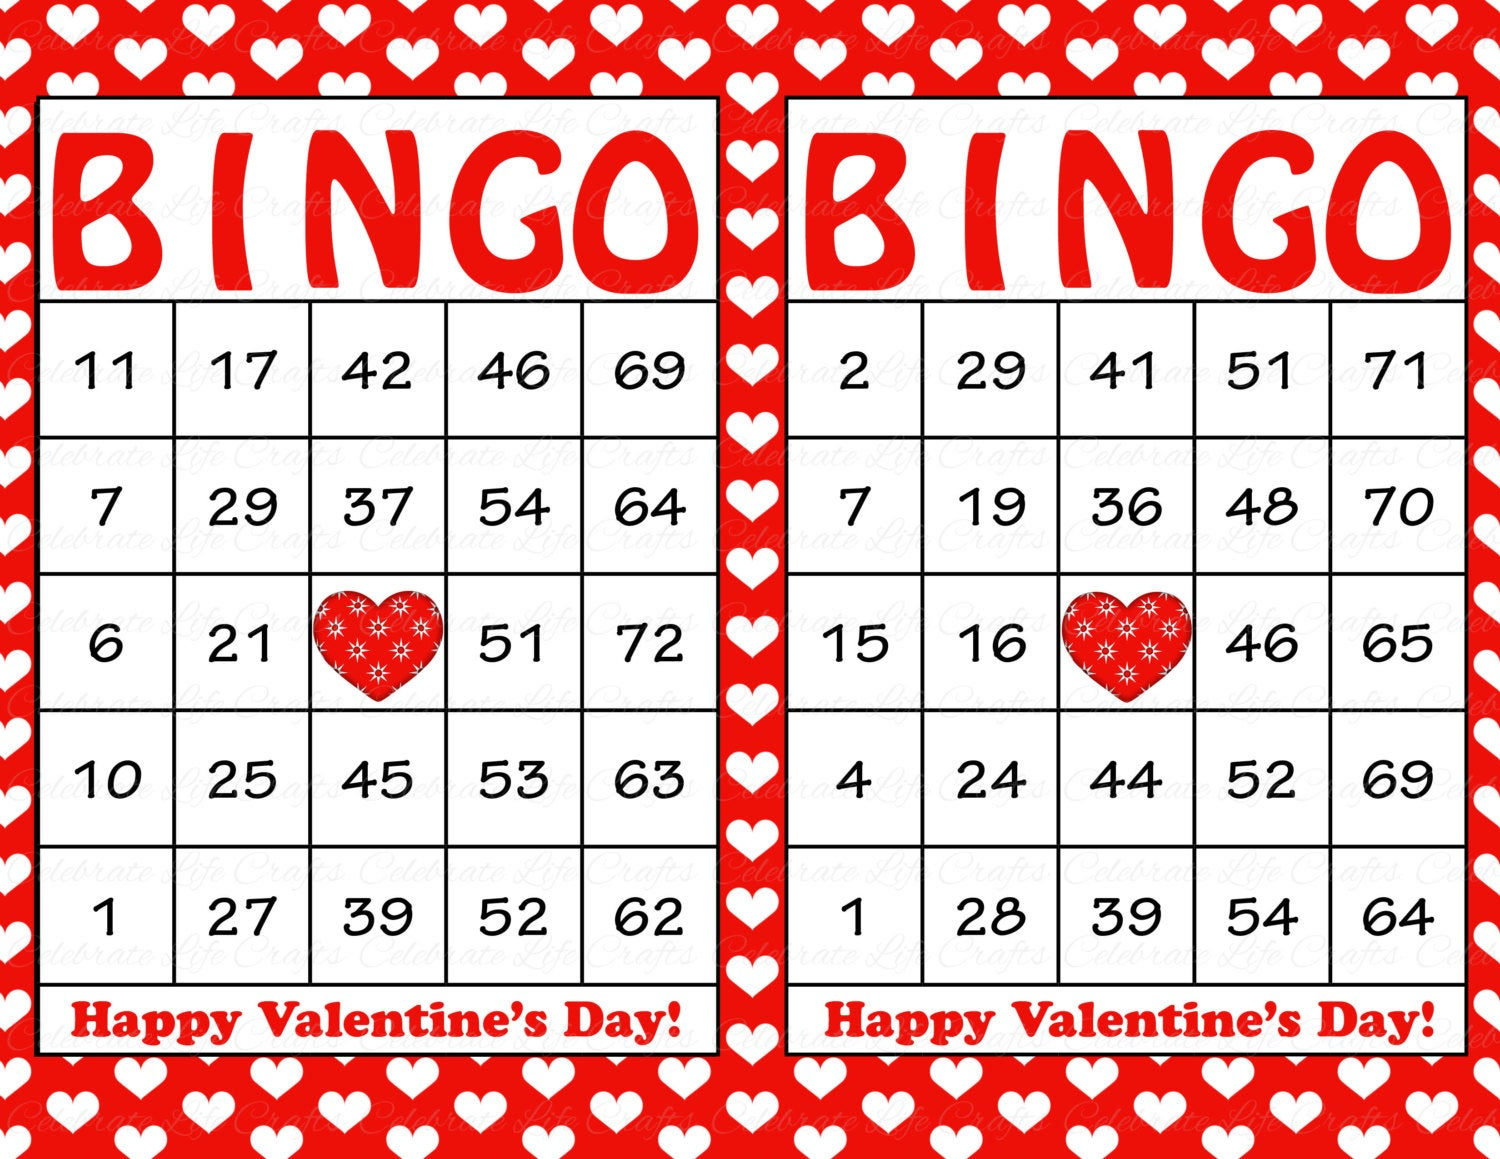 40 [Cdr] Free Printable Bingo Cards 1-75 Pdf Download Zip